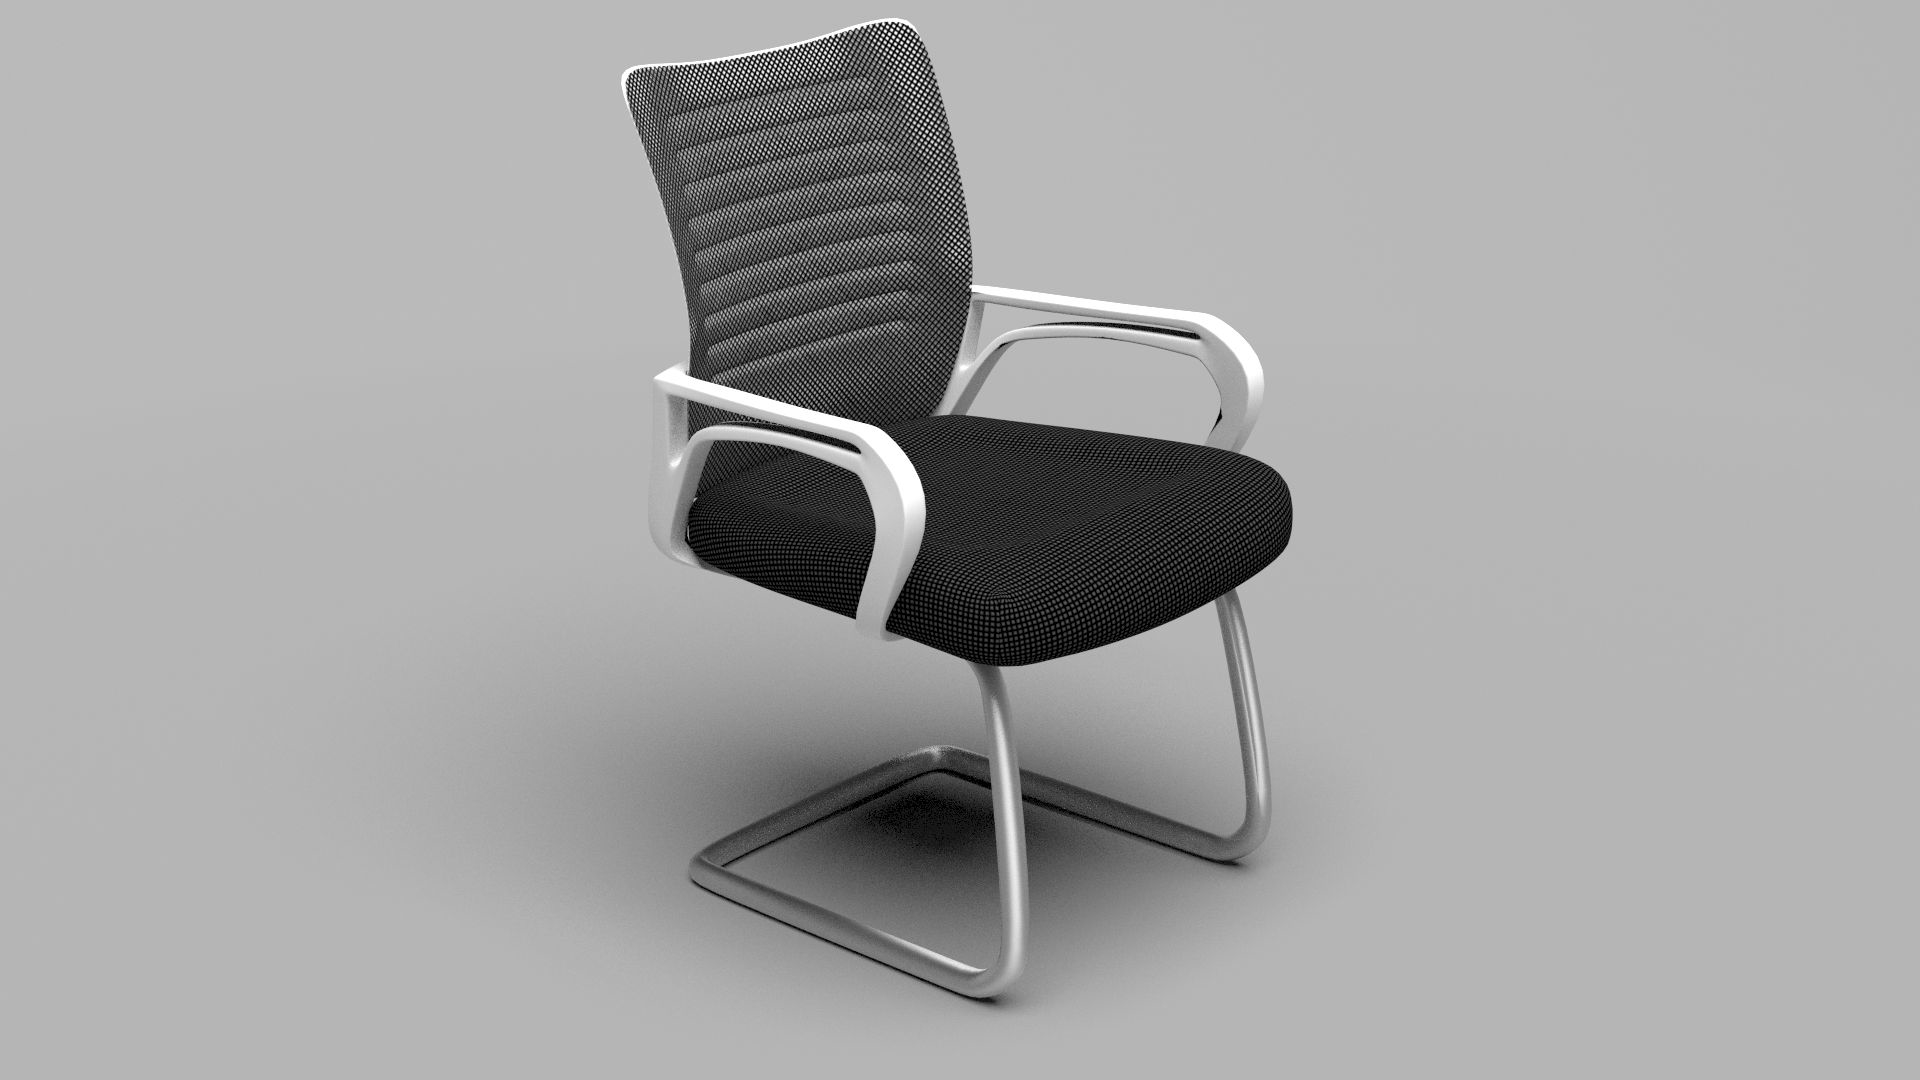 Breathable Foam Cushion Office Chair 3d Model Turbosquid 1490522